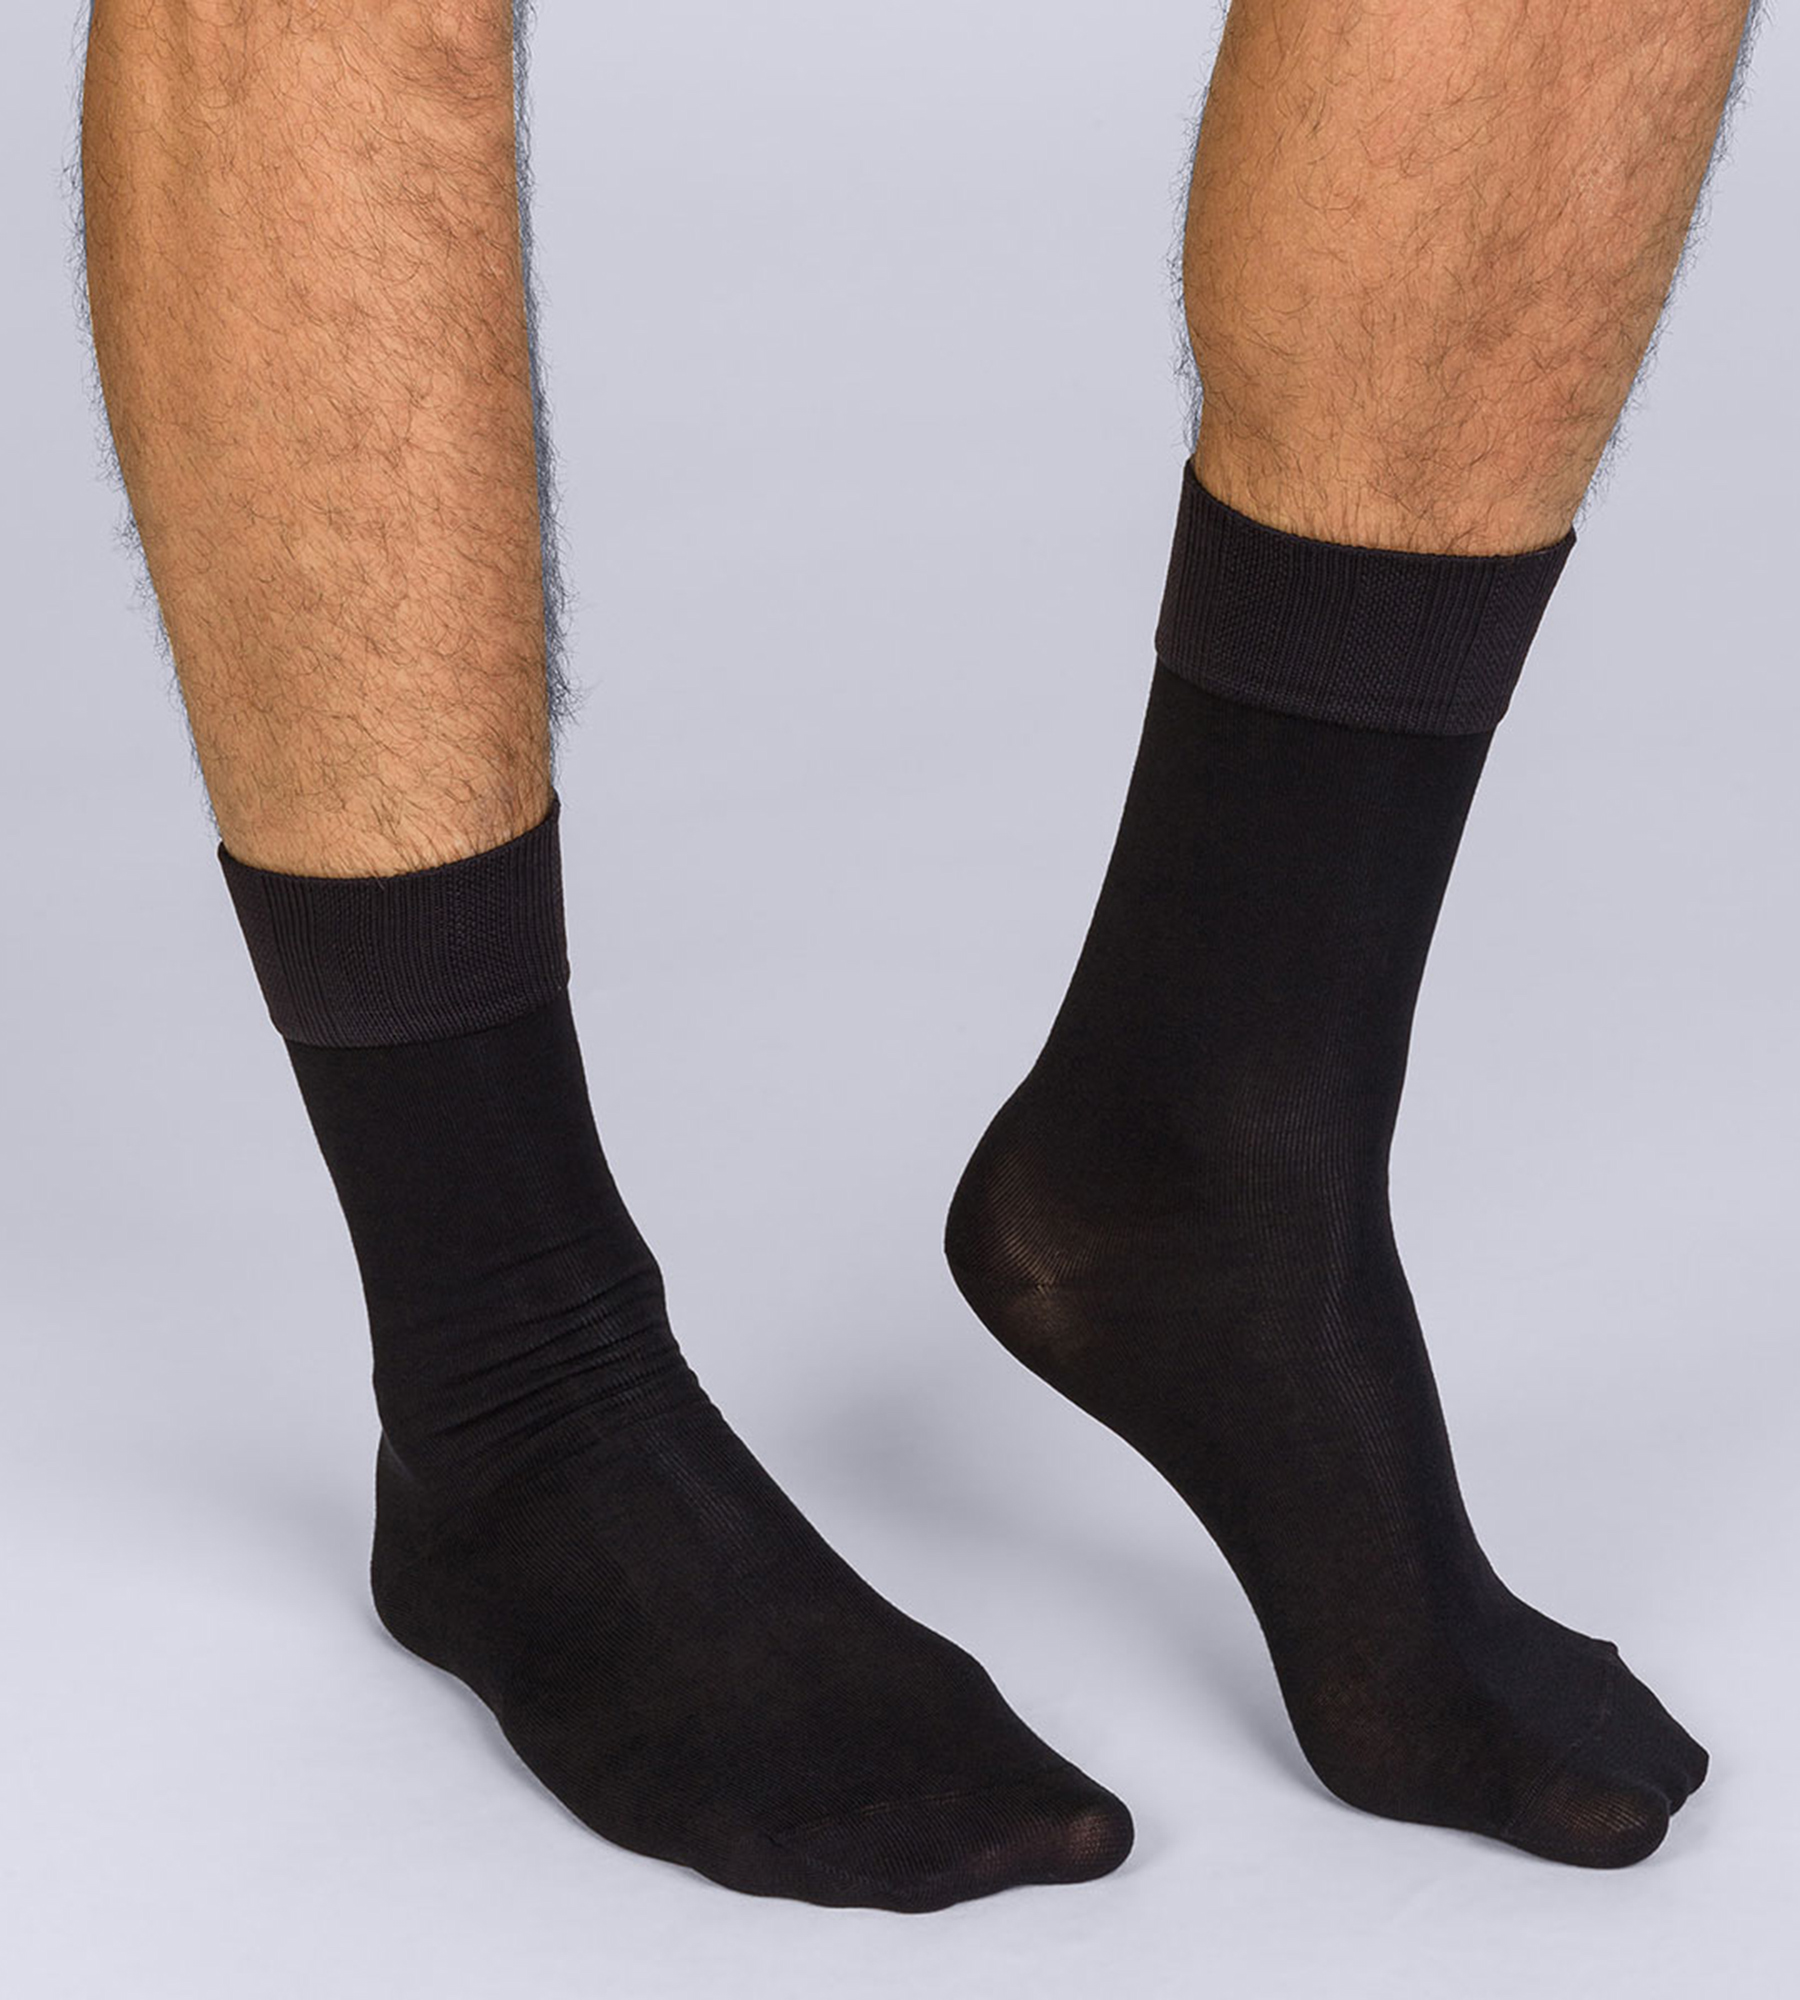 Pack de 4 pares de calcetines de caña media negros y grises para hombre Eco  Dim